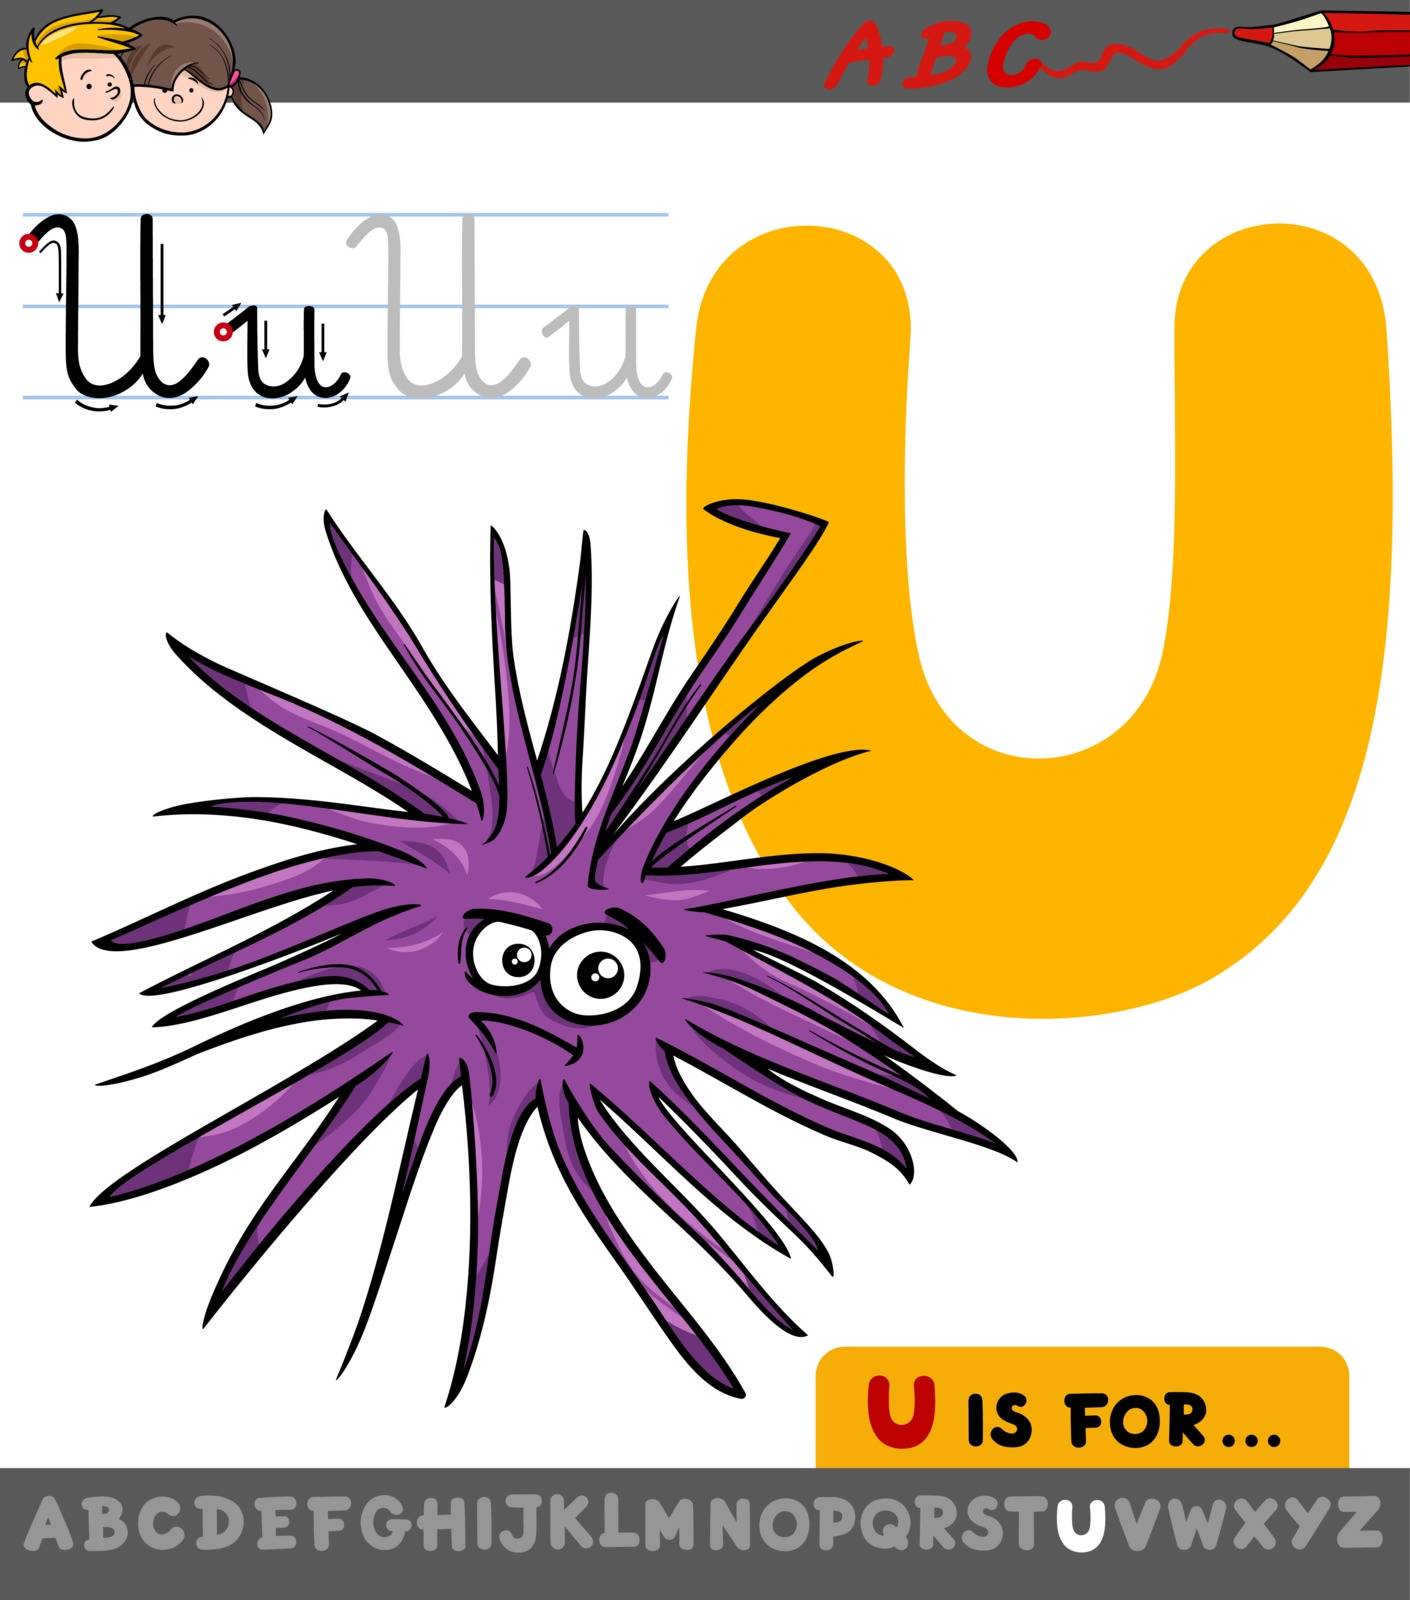 letter u with cartoon urchin sea character by izakowski